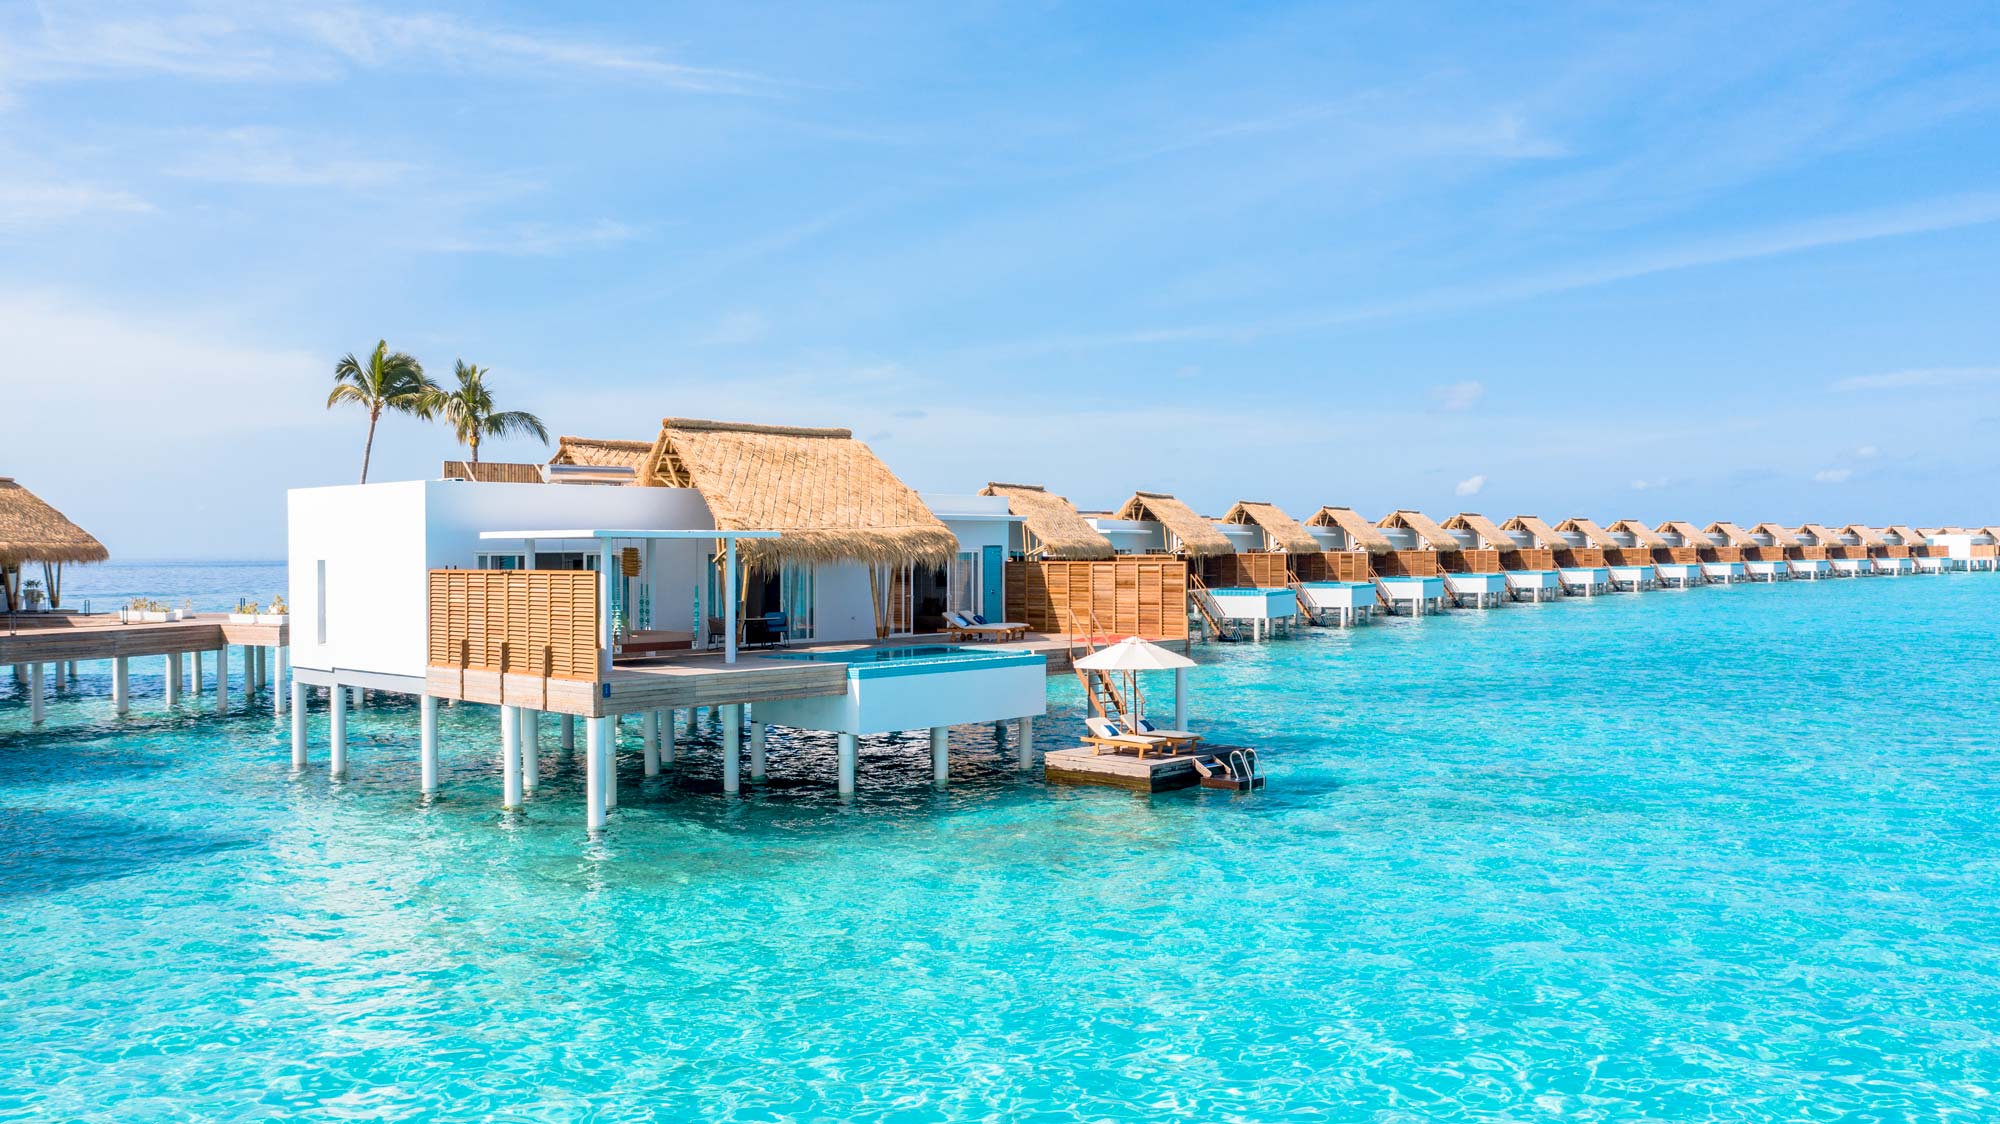 Emerald Maldives resort and spa villas